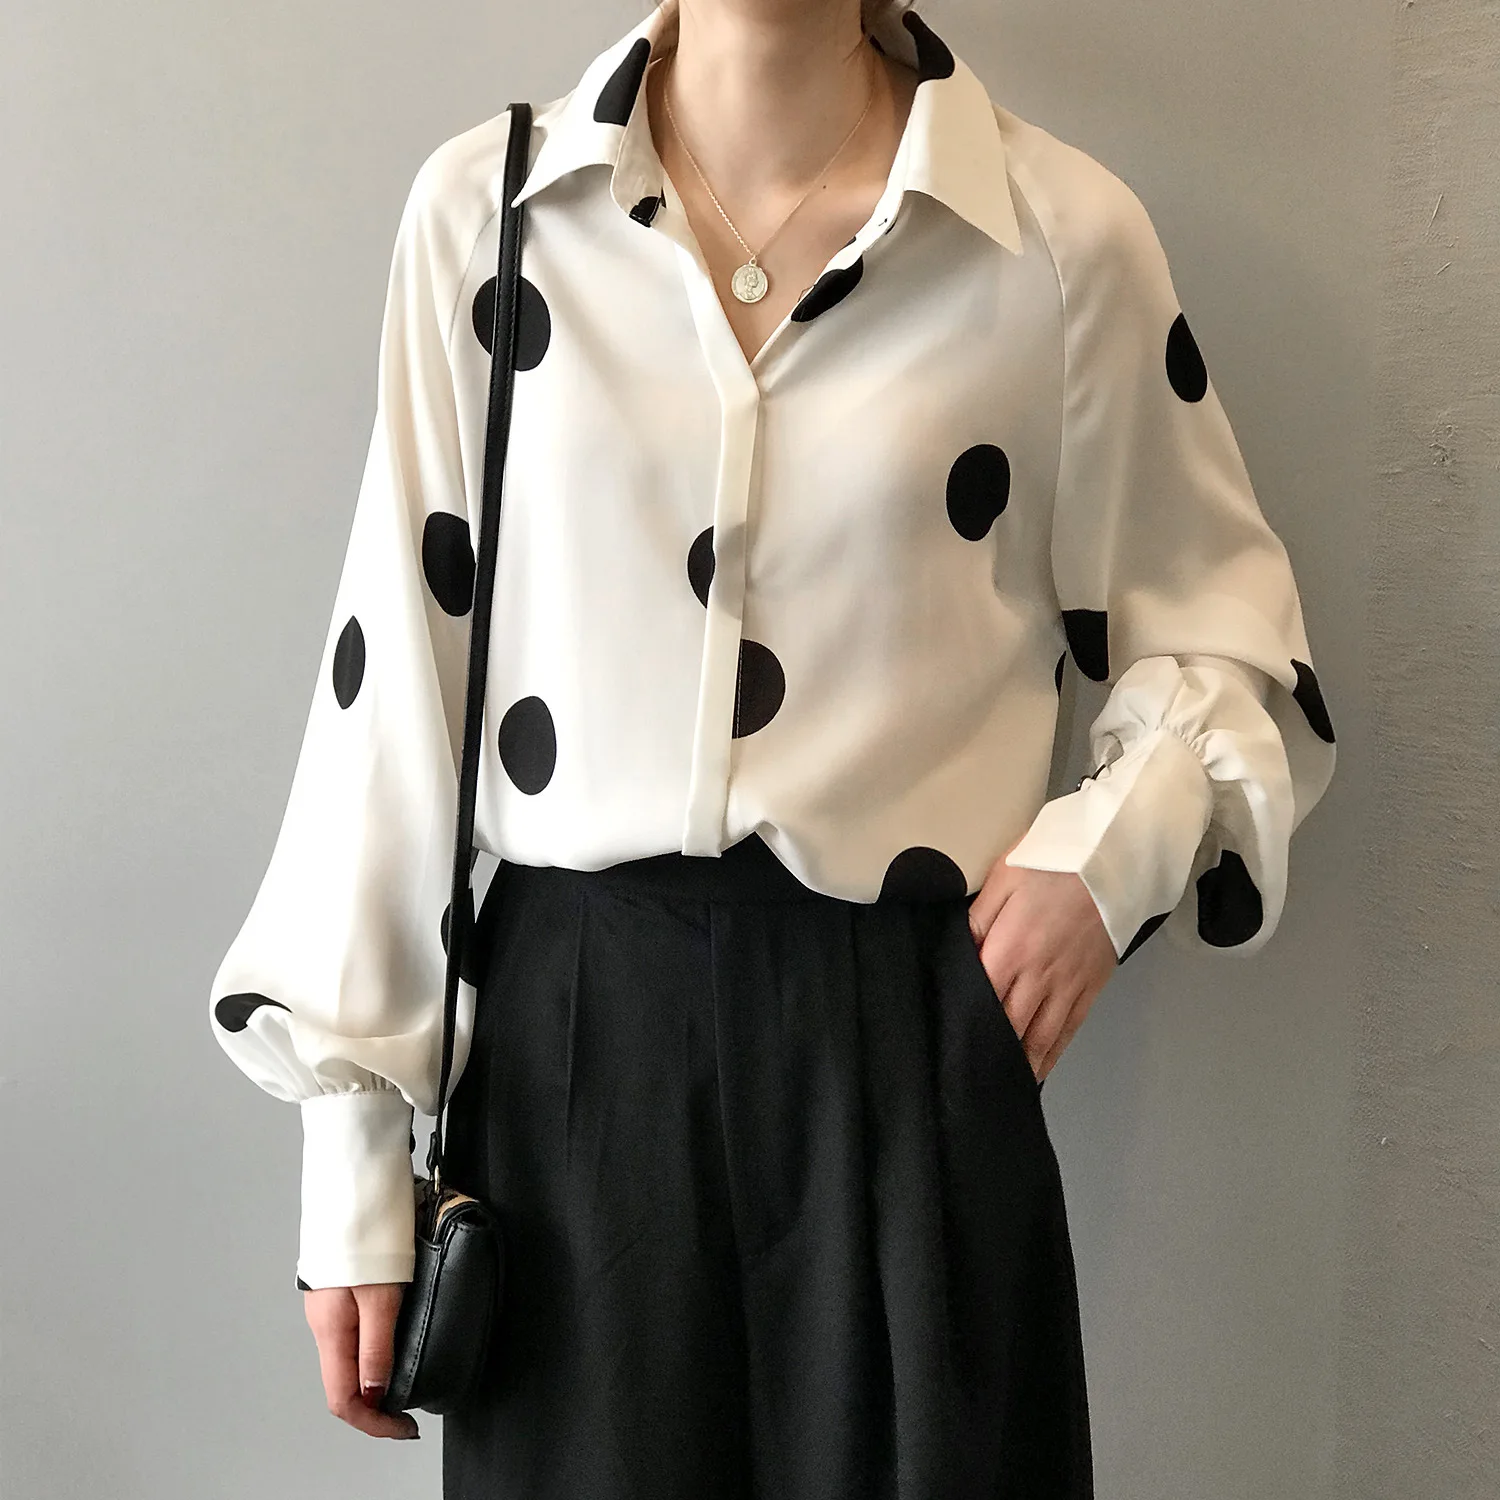 Women Blouse 2019 Spring Casual Long Lantern Sleeve Women Tops And Blouses Dots Print Chiffon Shirts Blusas Roupa Feminina Tops